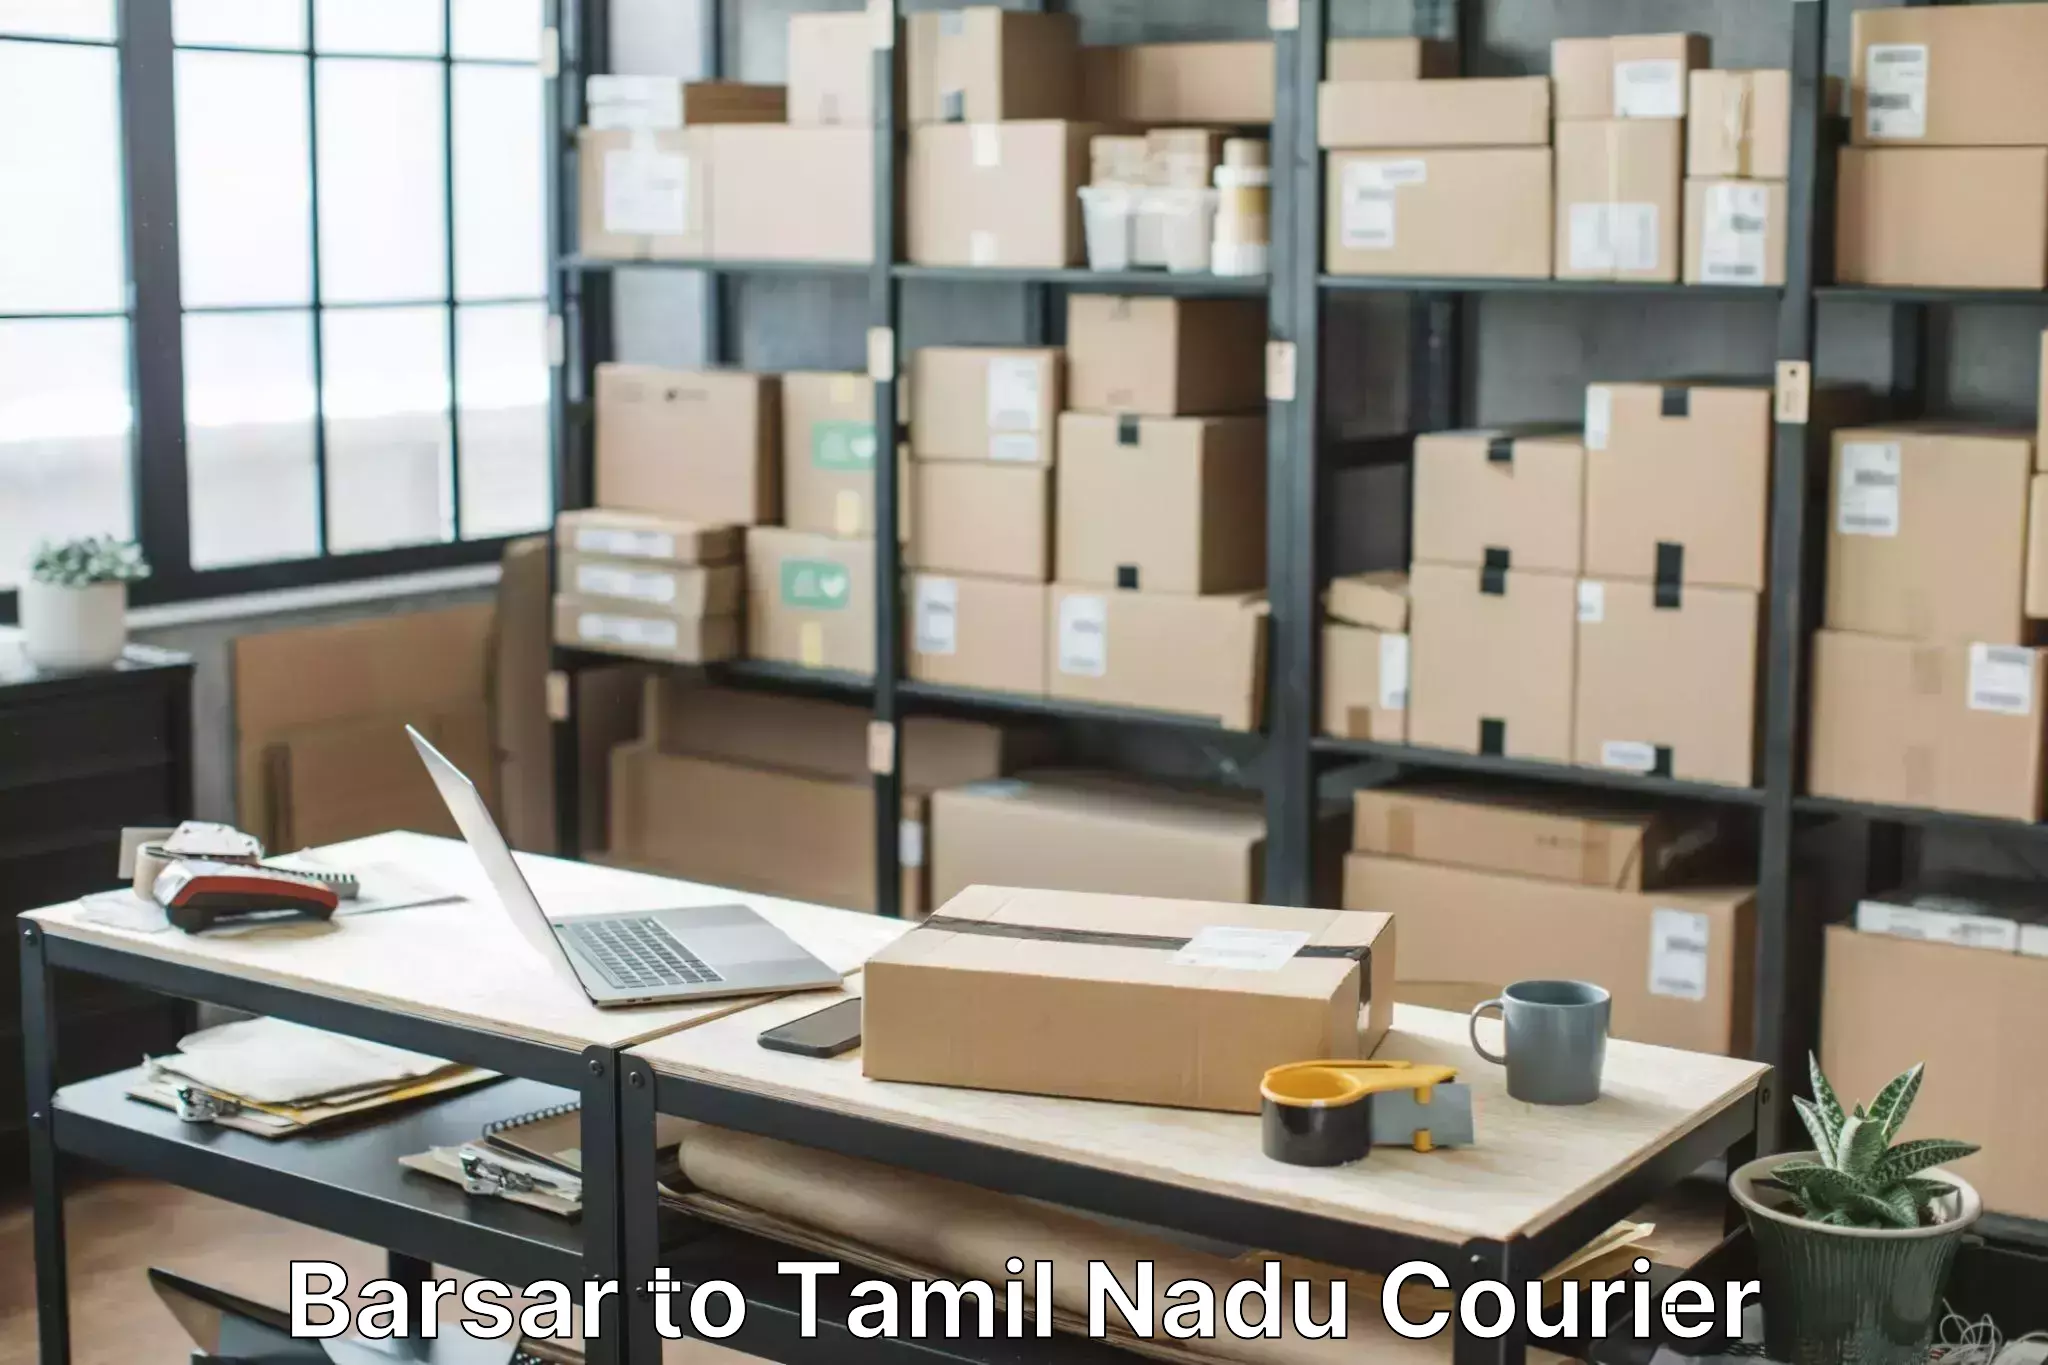 Professional moving company Barsar to Tamil Nadu